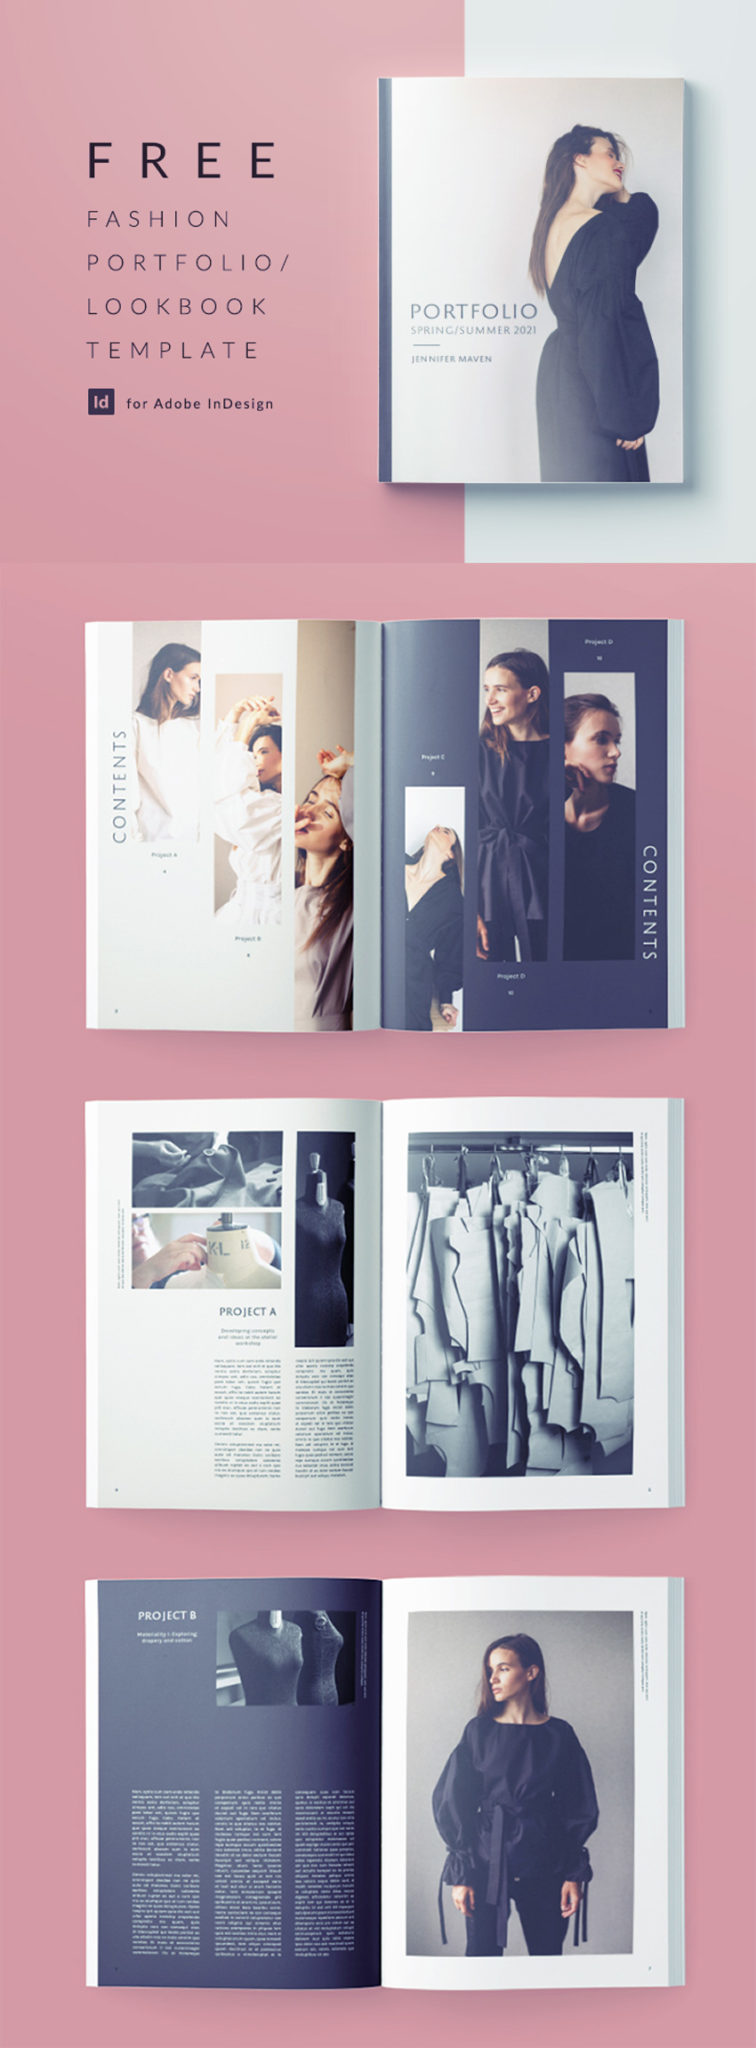 fashion portfolio fashion lookbook free indesign template